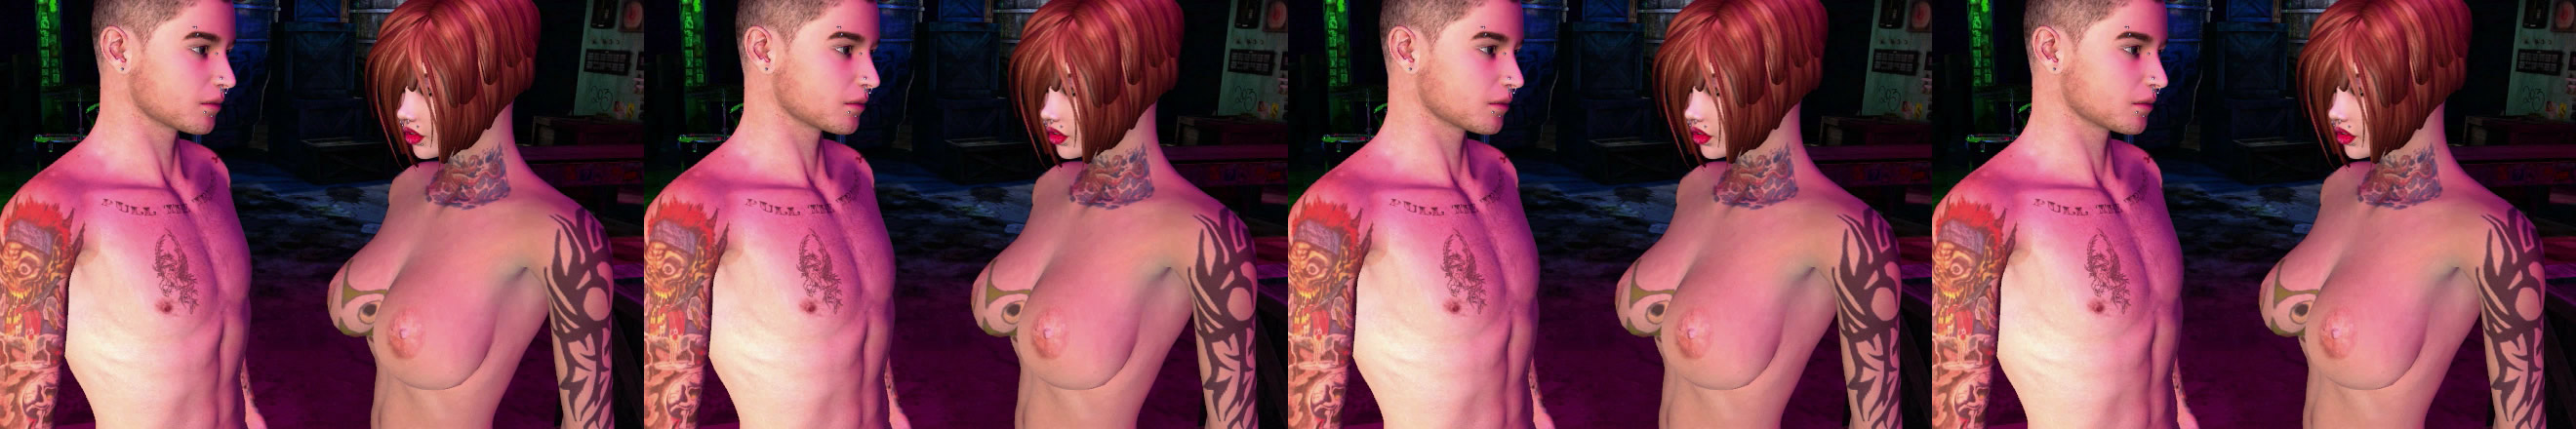 Tattoo Sex Symbols - Free Sex Games